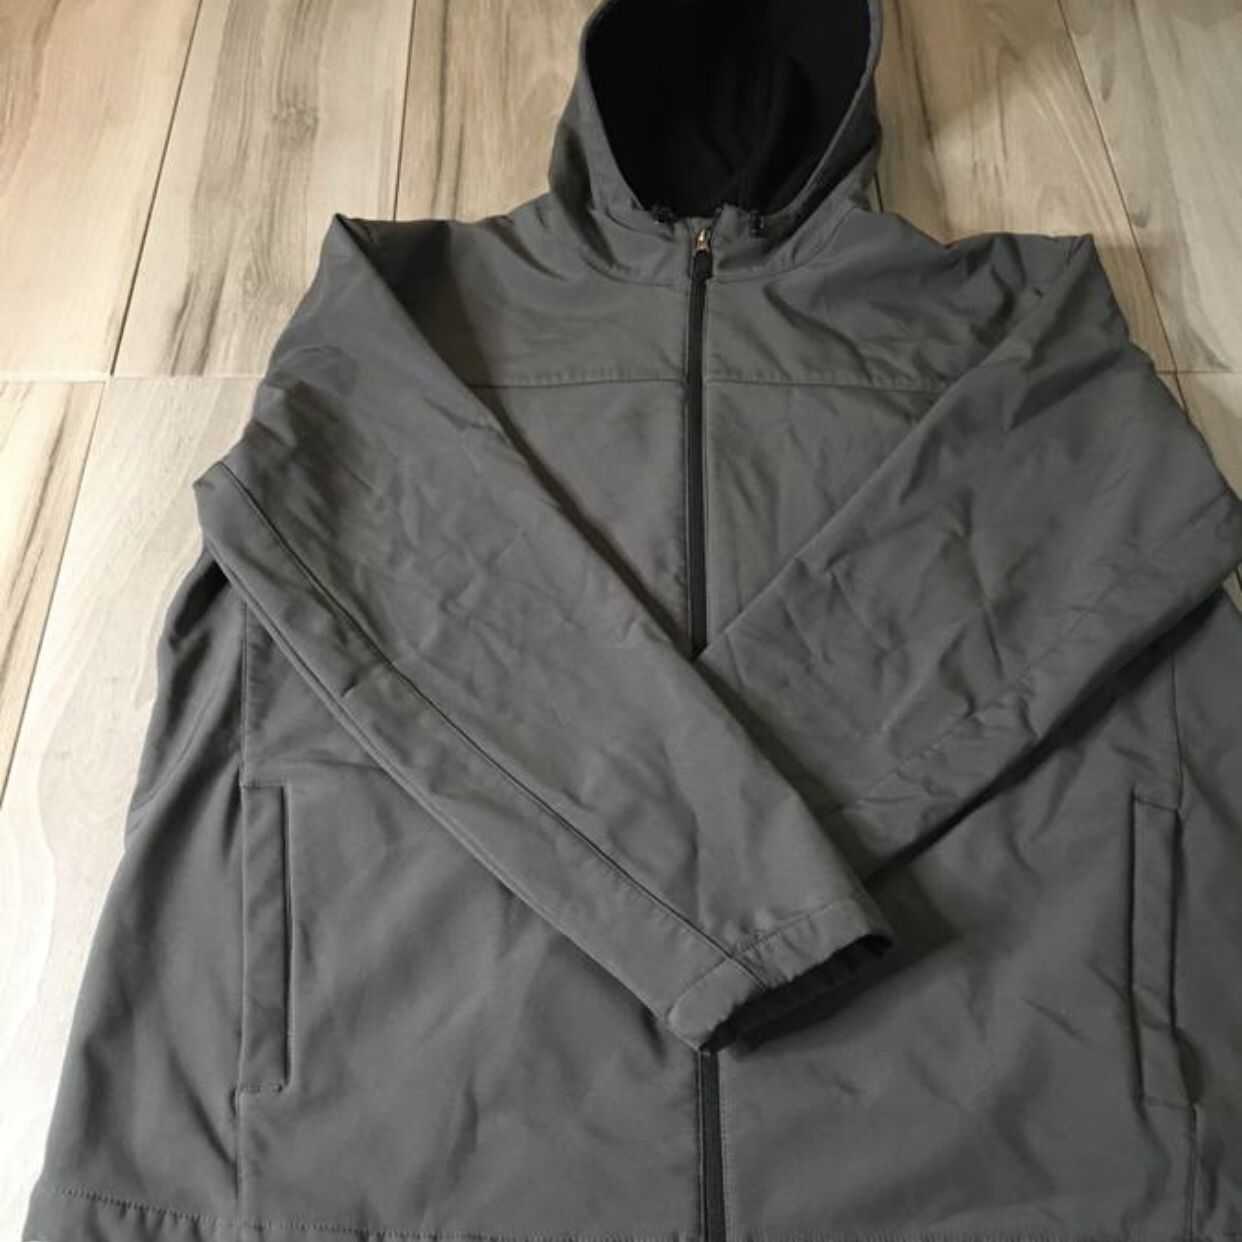 Softshell Gray Jacket 2XL Tall Hooded Fleece Lined Zippered